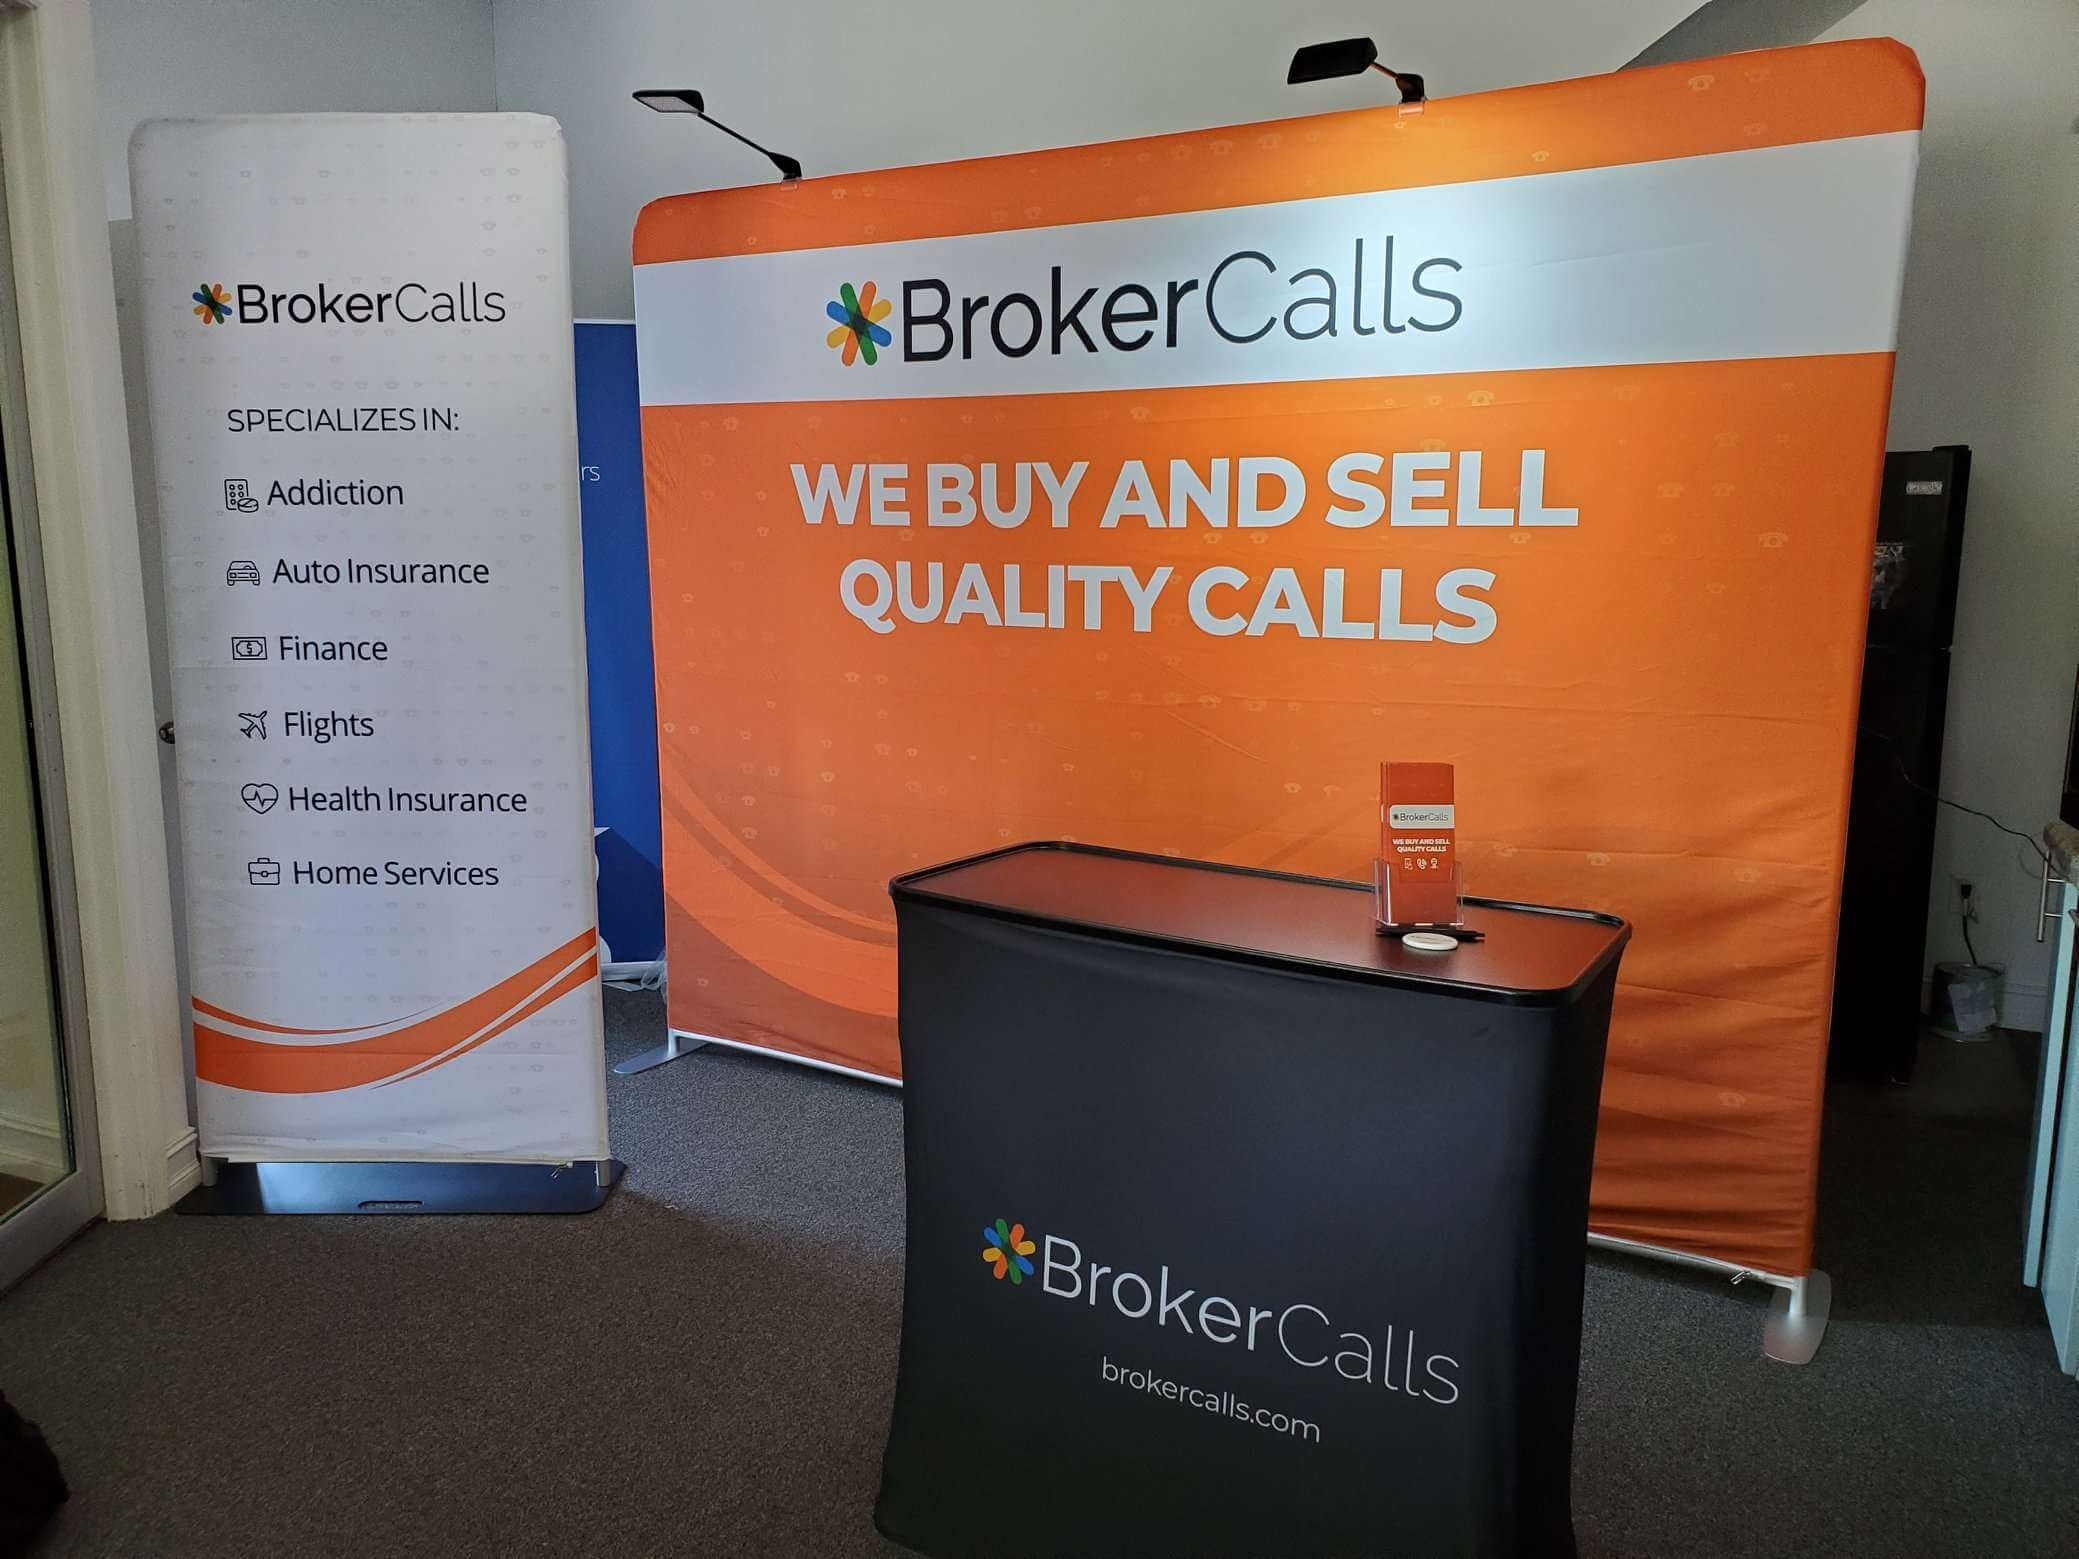 Meet BrokerCalls at Affiliate Summit in Las Vegas